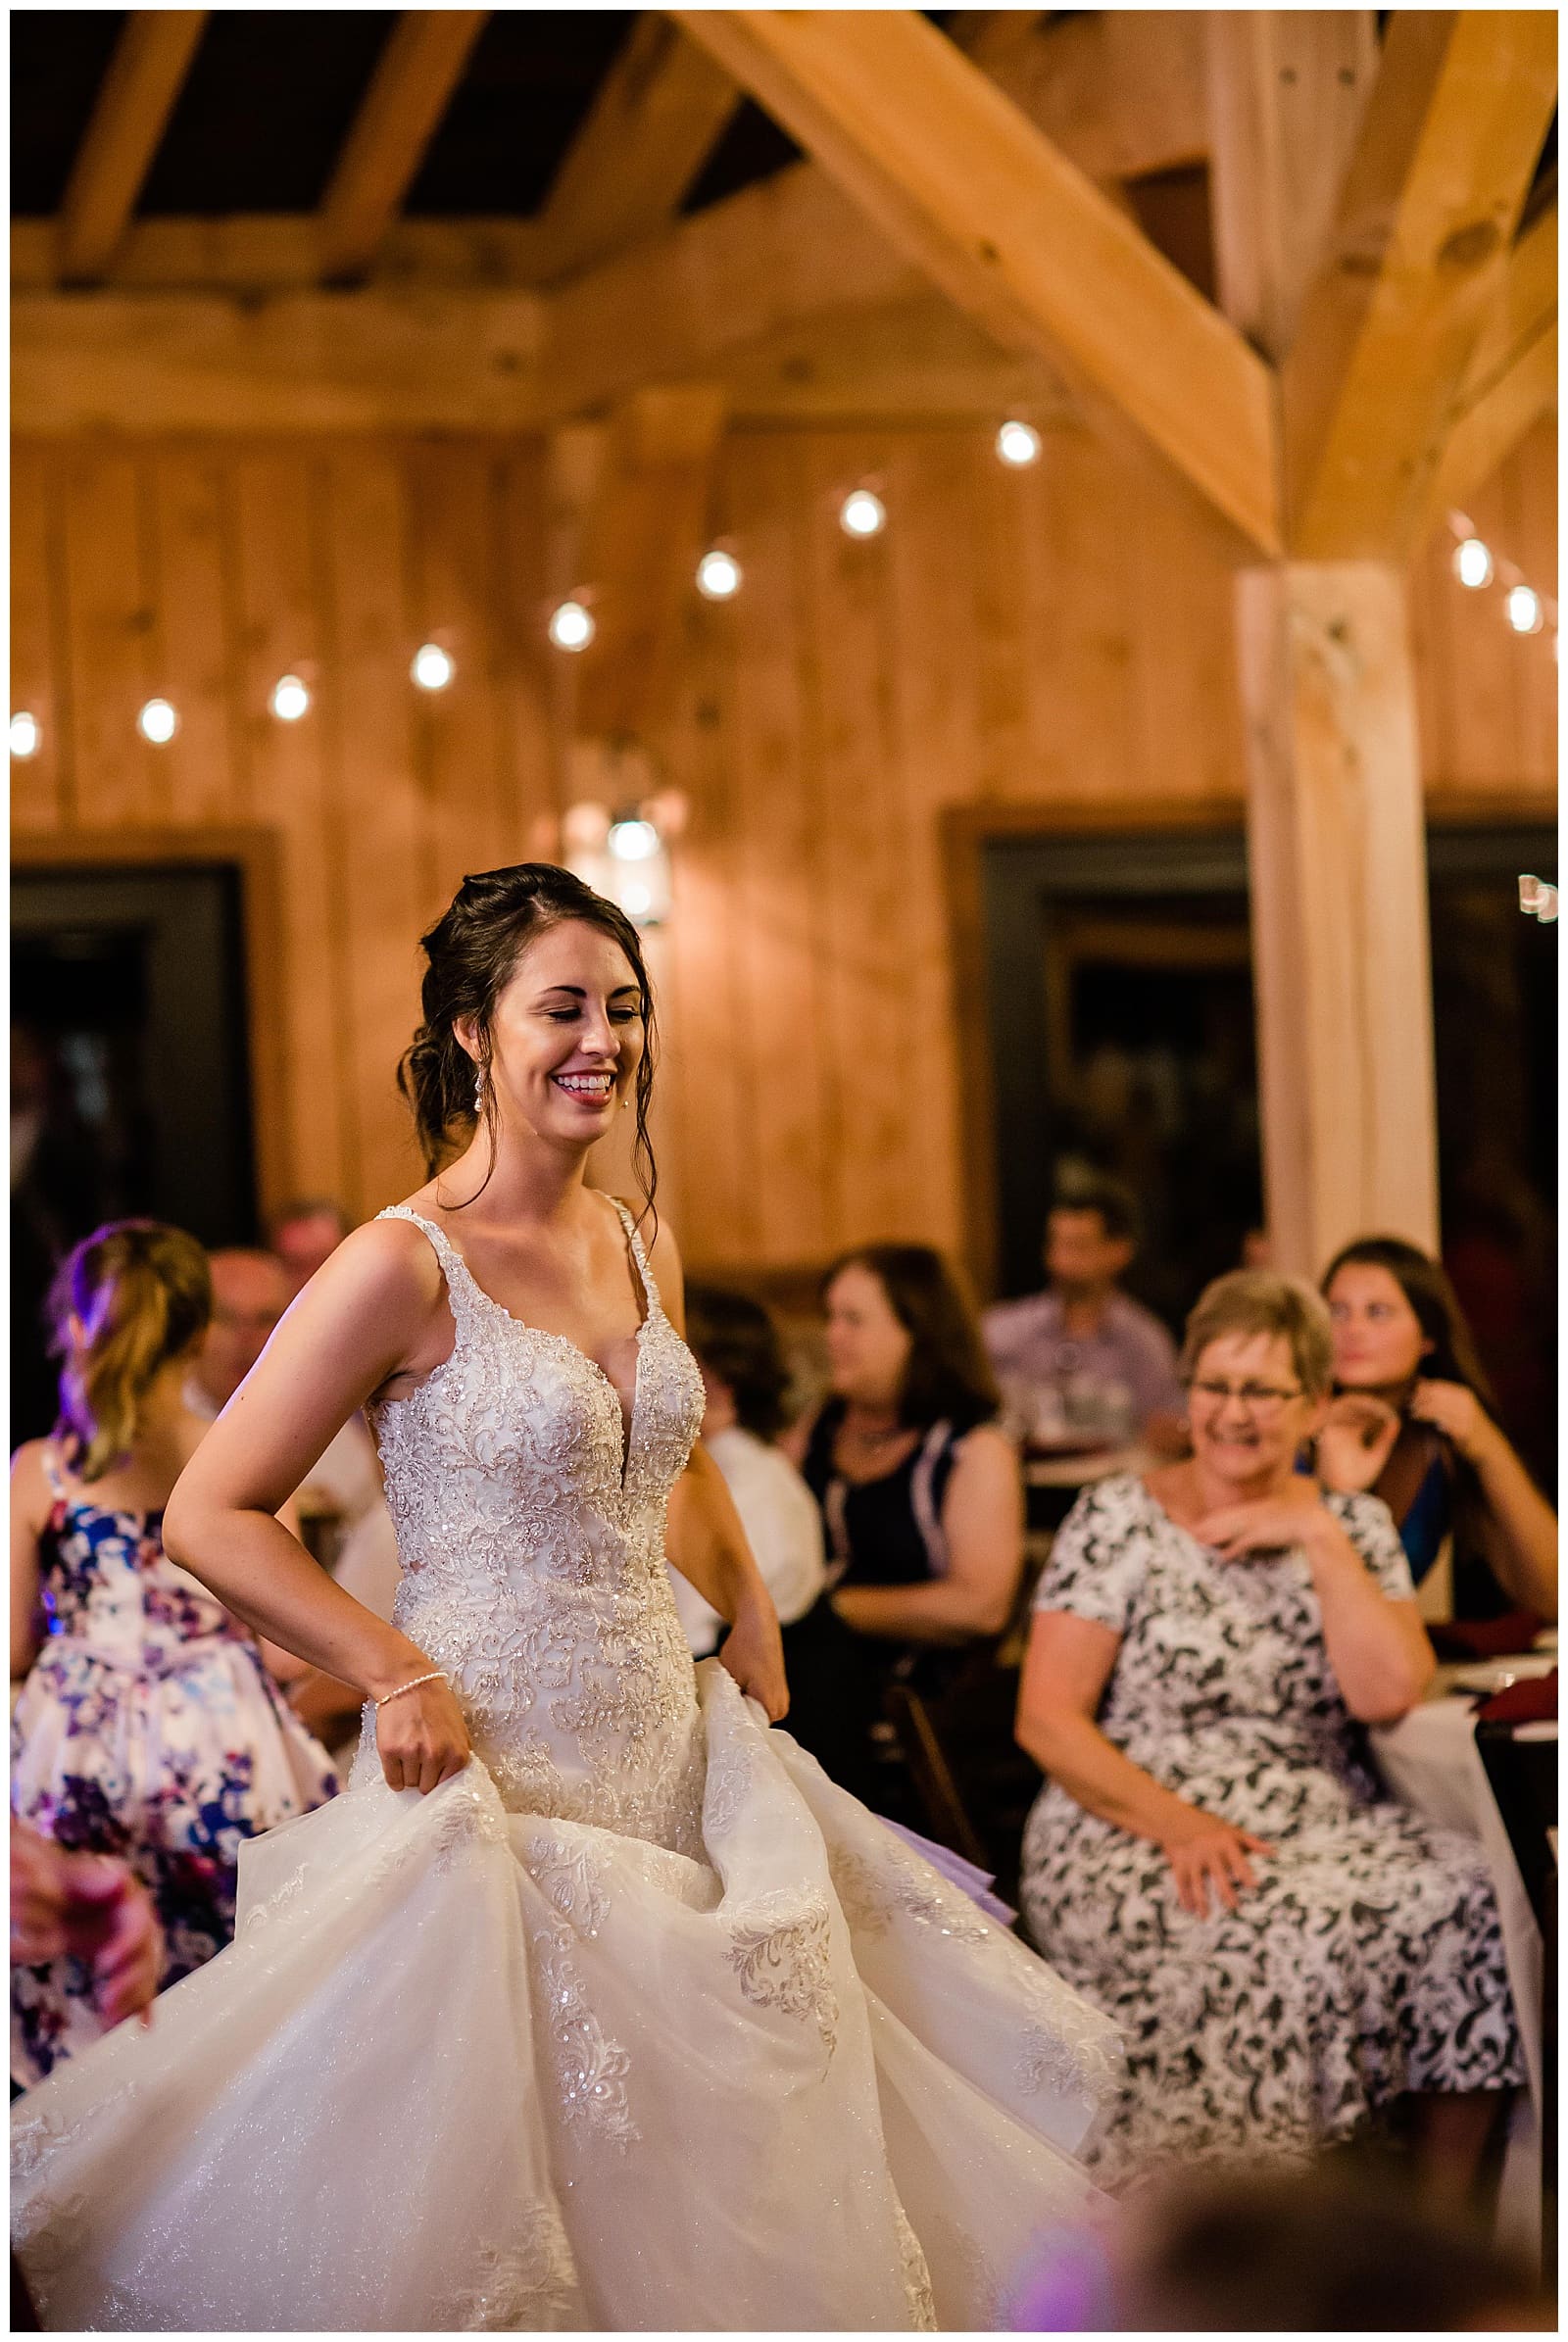 Danielle-Defayette-Photography-Middle-Fork-Barn-Wedding-VA-2020_0056.jpg